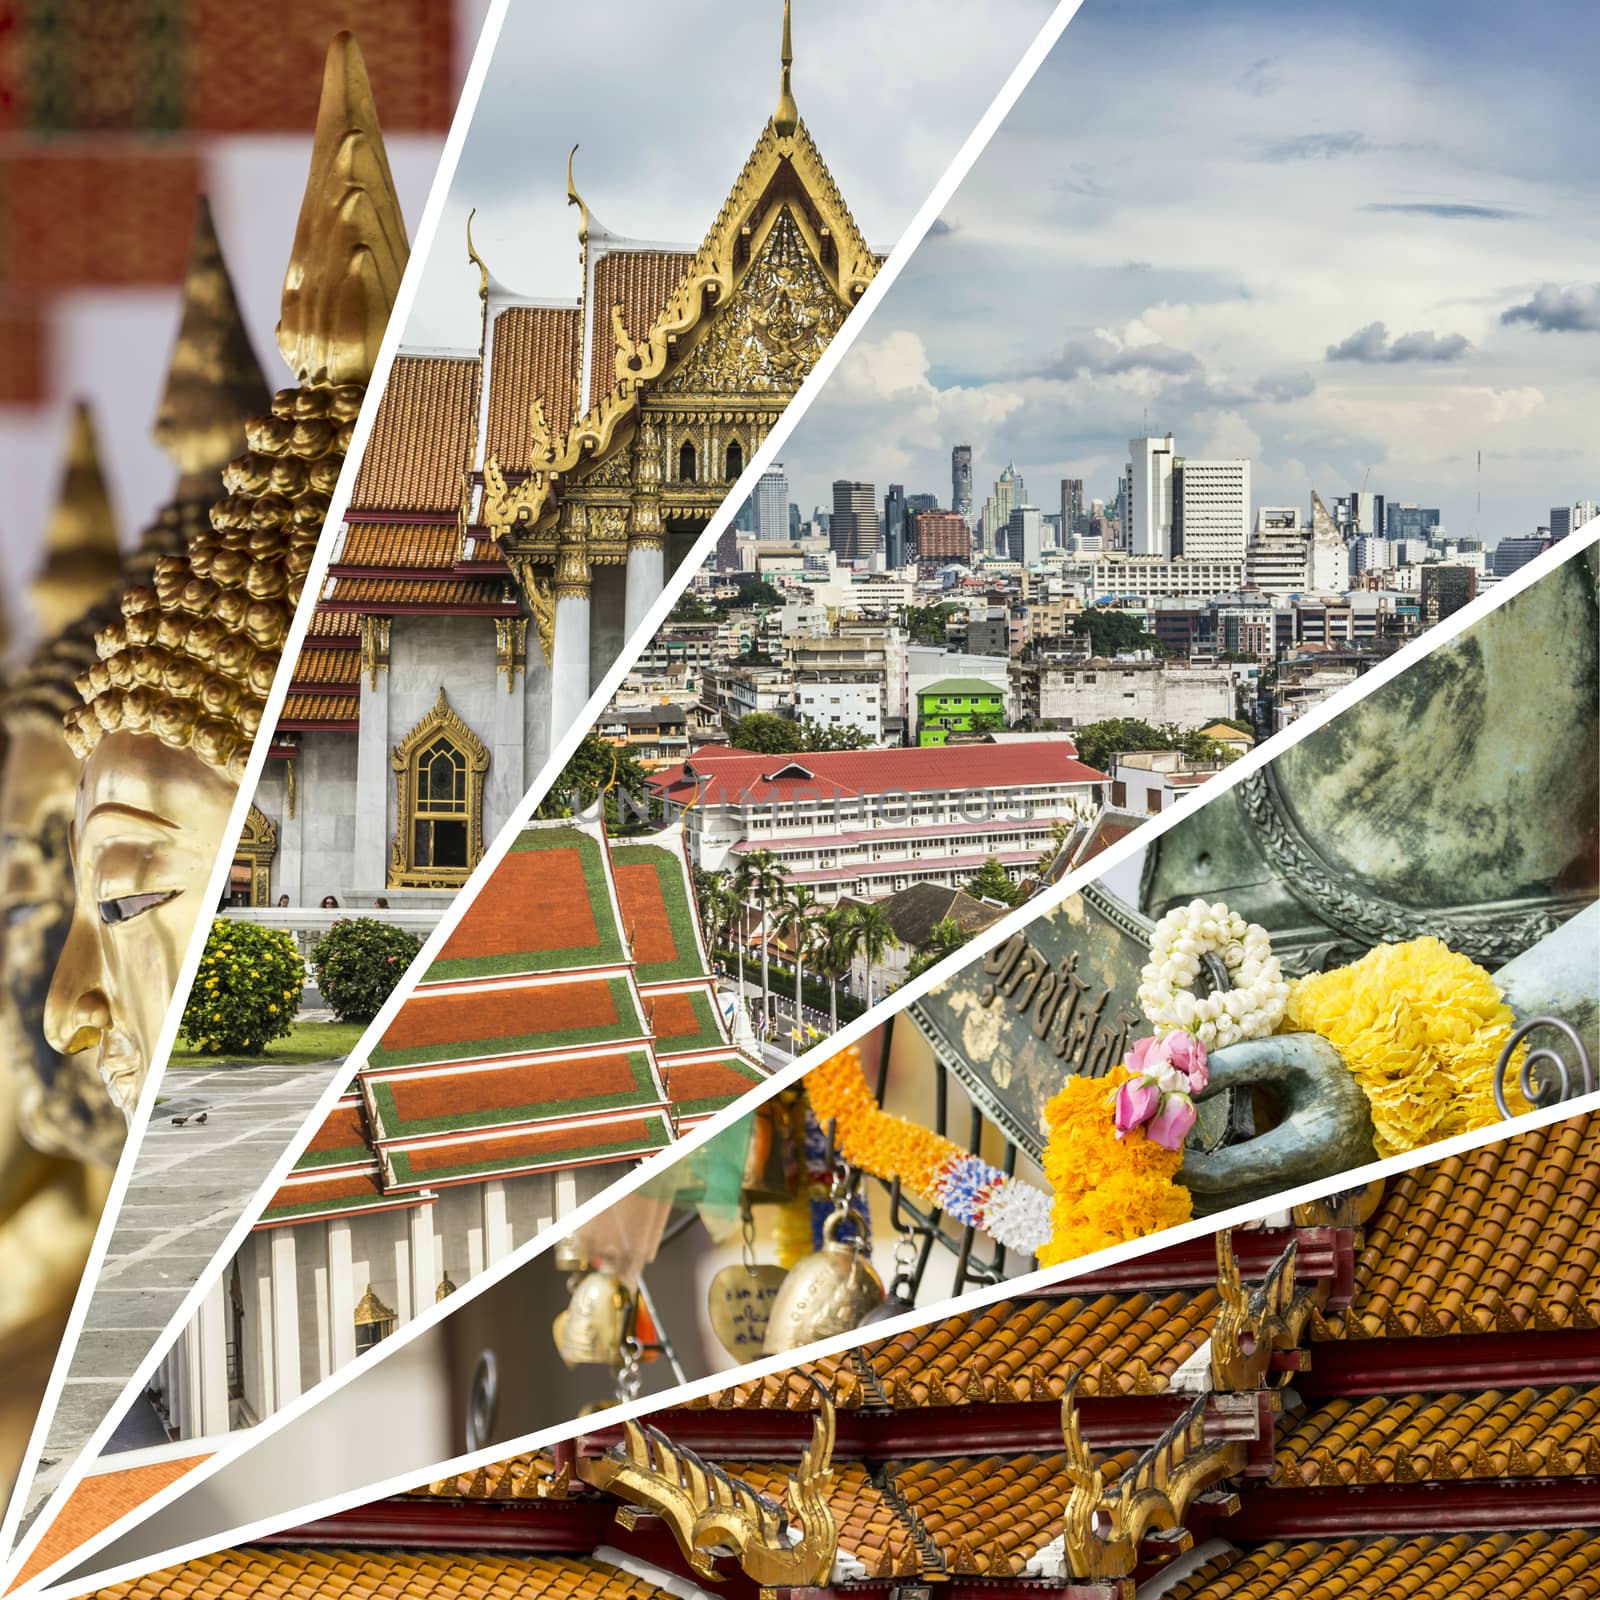 Collage of Bangkok (Thailand) images - travel background (my photos)